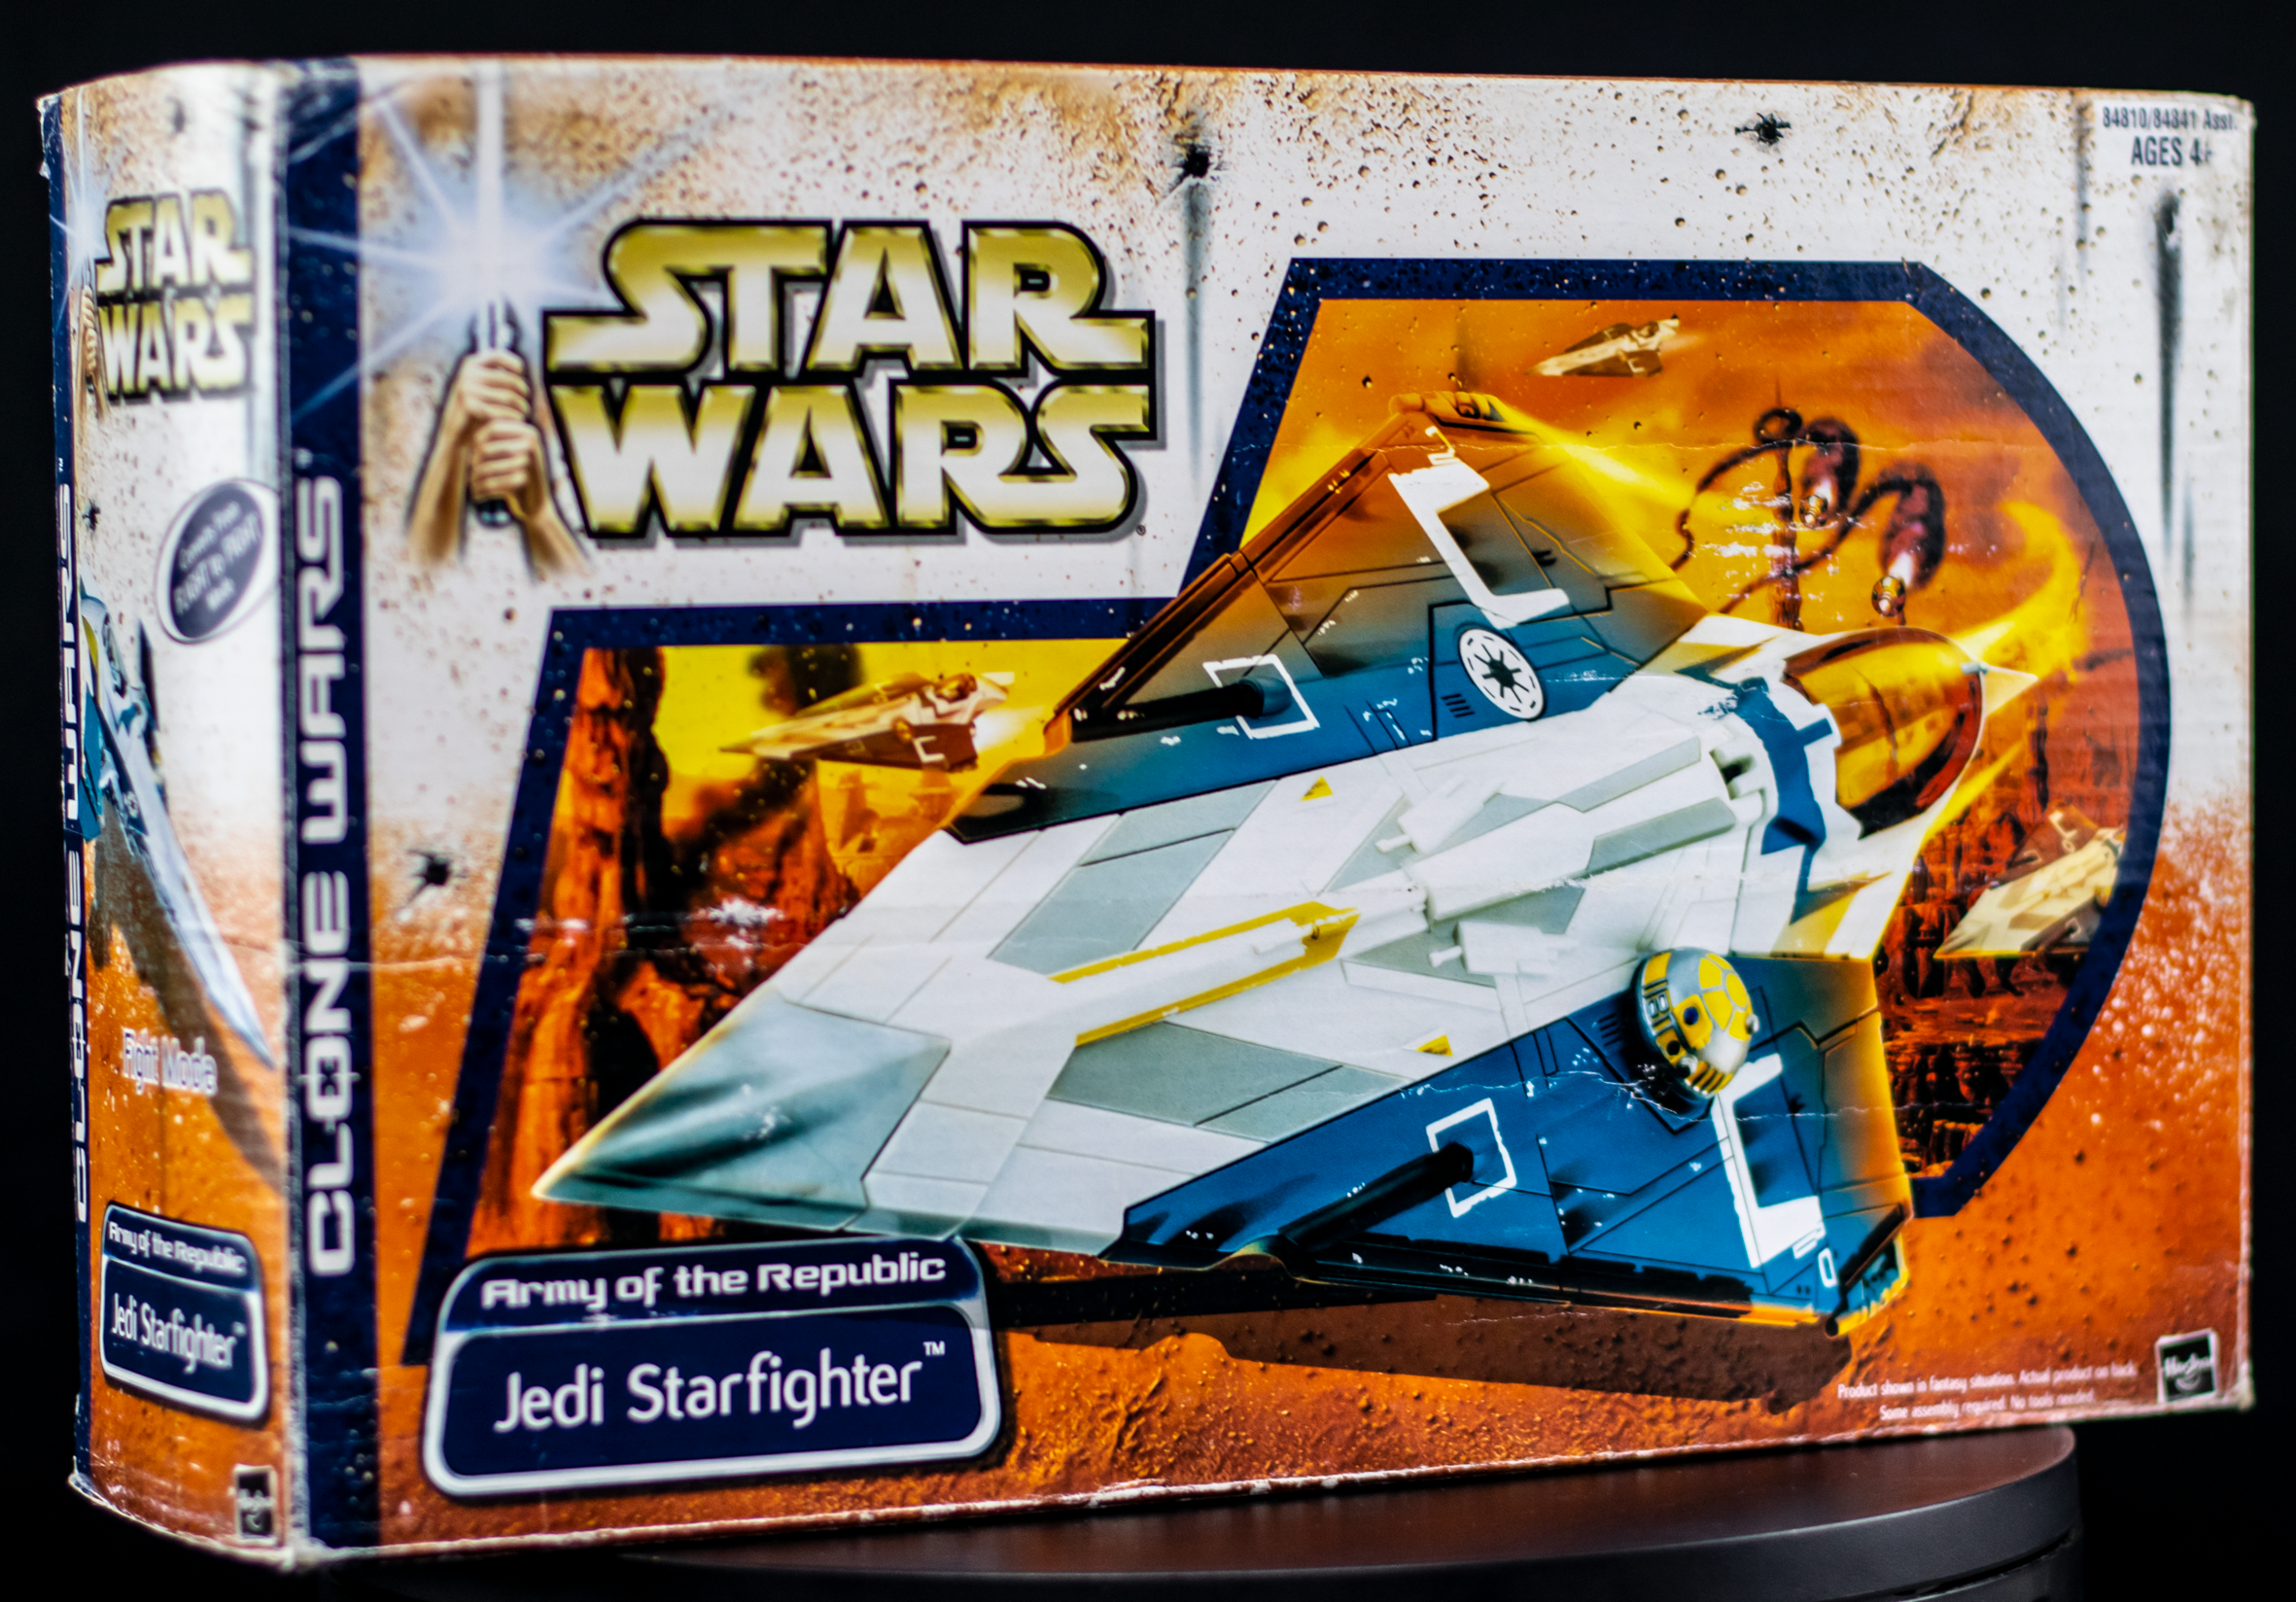 Star Wars: Clone Wars Army Of The Republic "Jedi Starfighter"